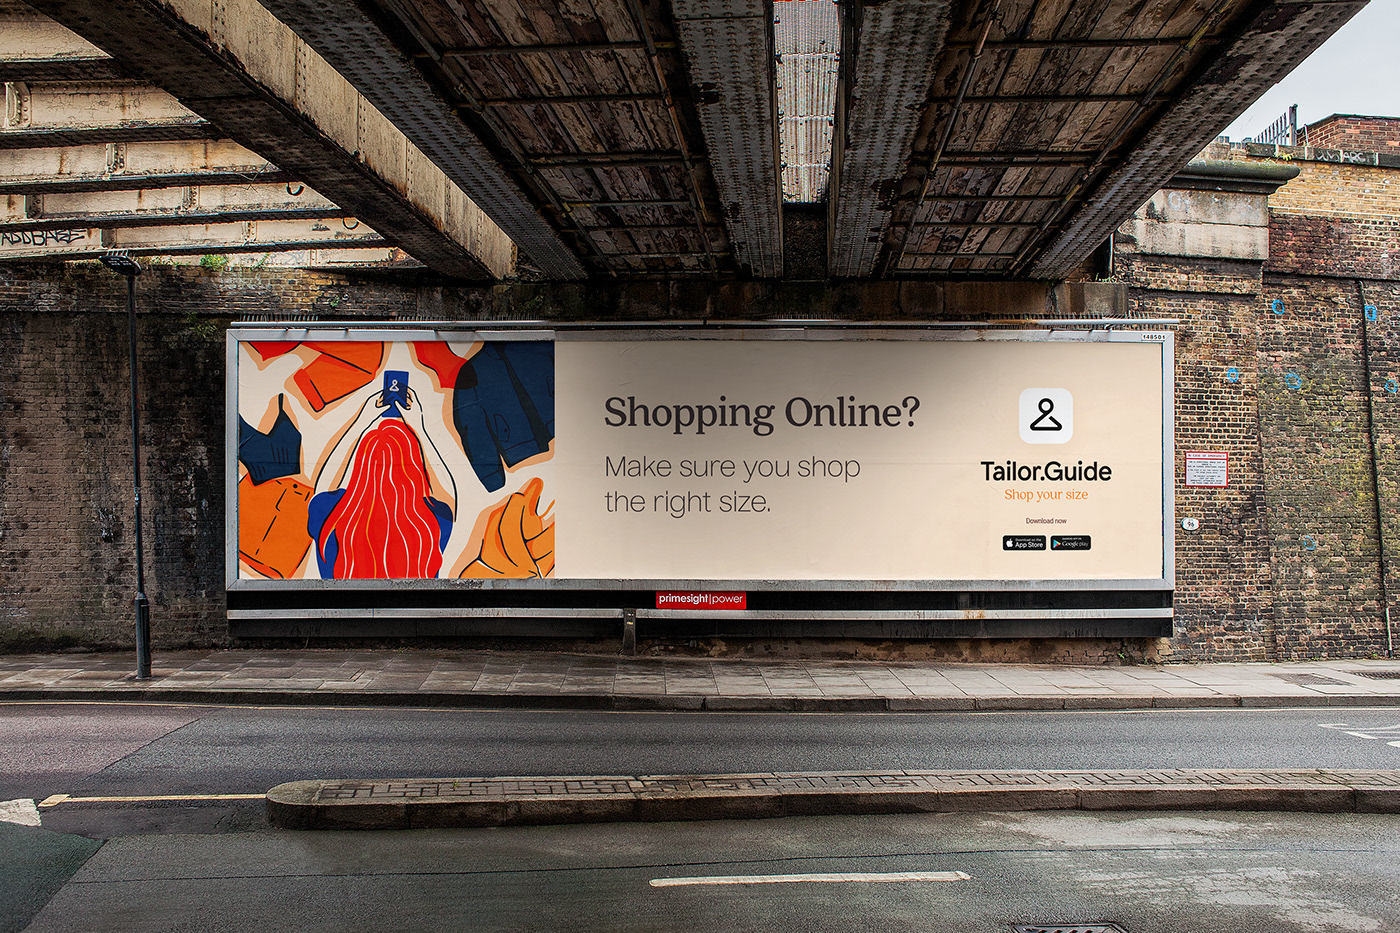 Shopping online?